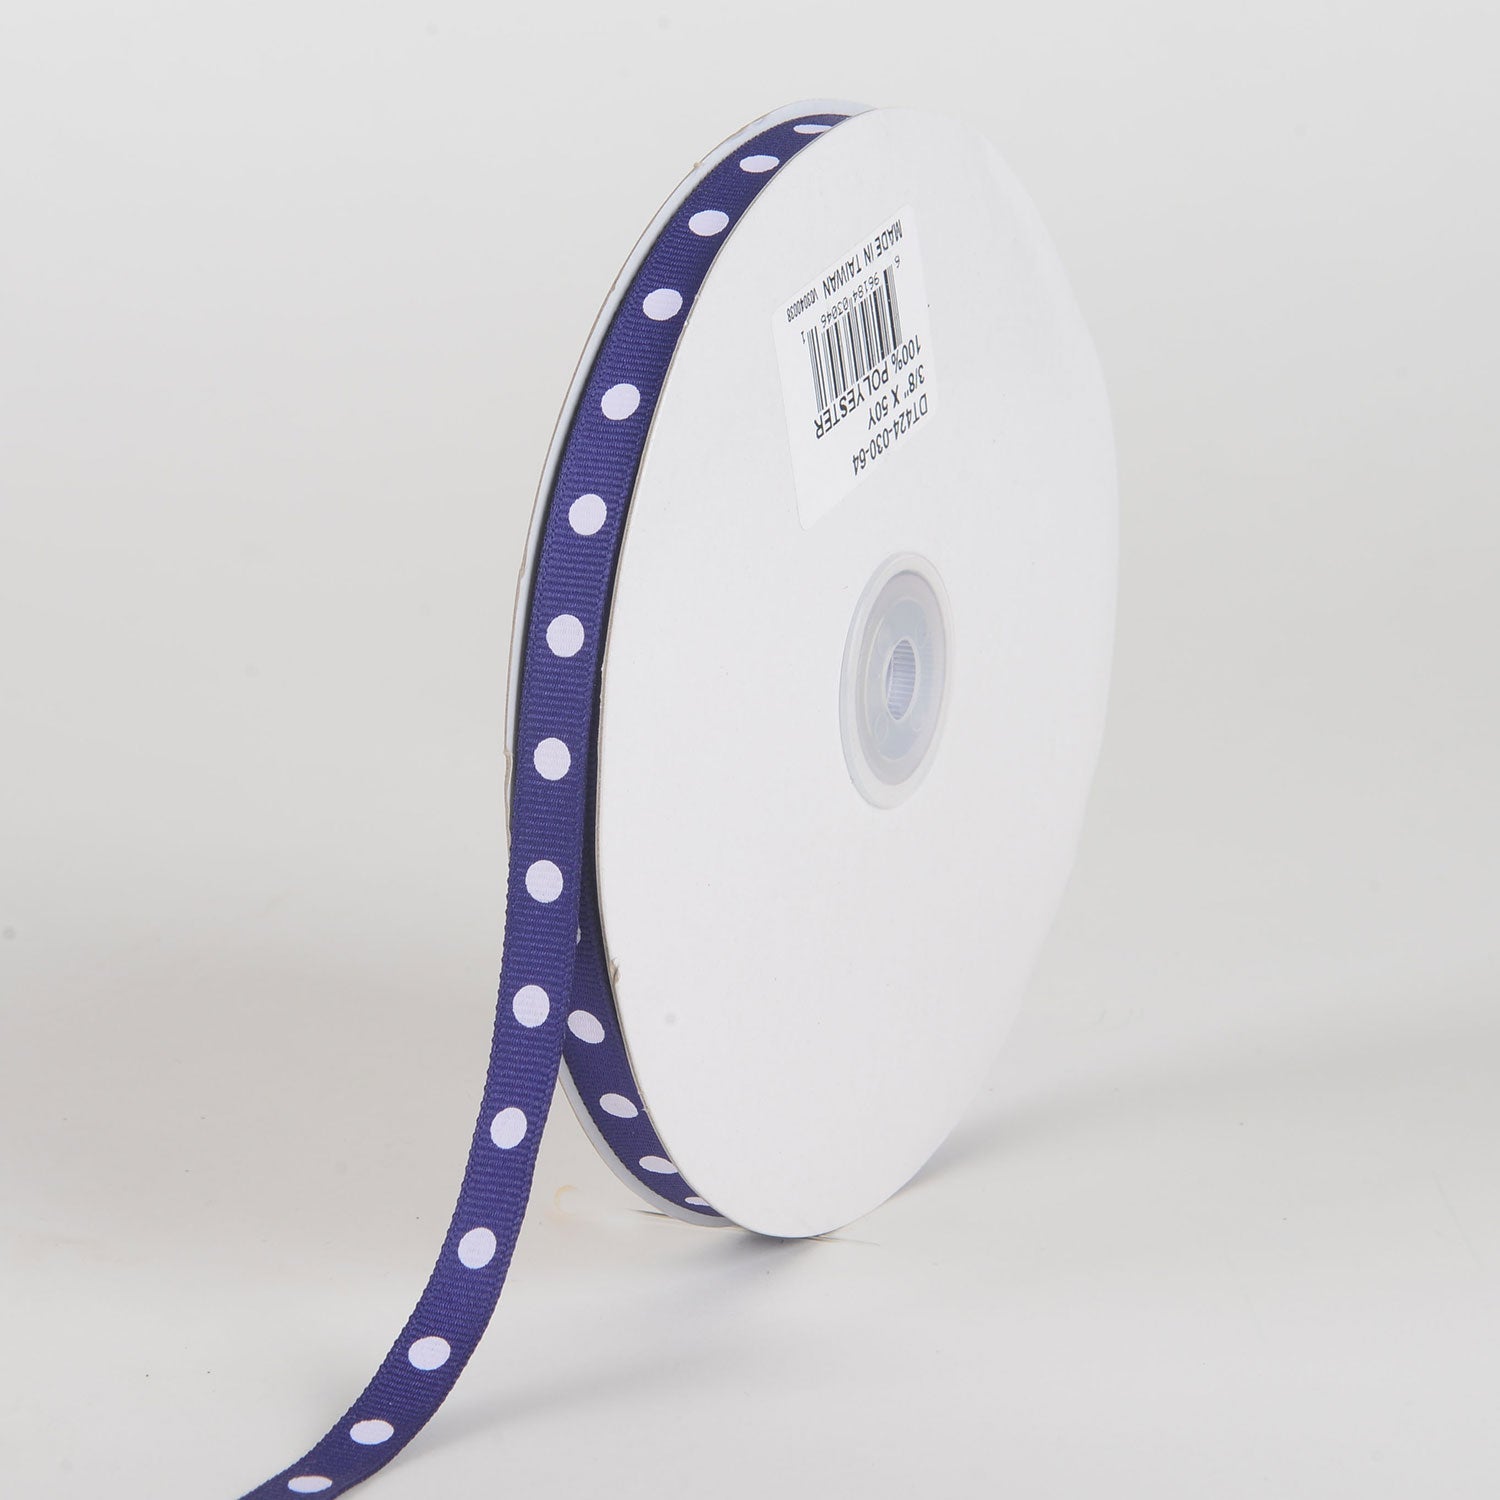 Quality Royal Blue Texture 3/8 Inch x 100 Yards Grosgrain Ribbon